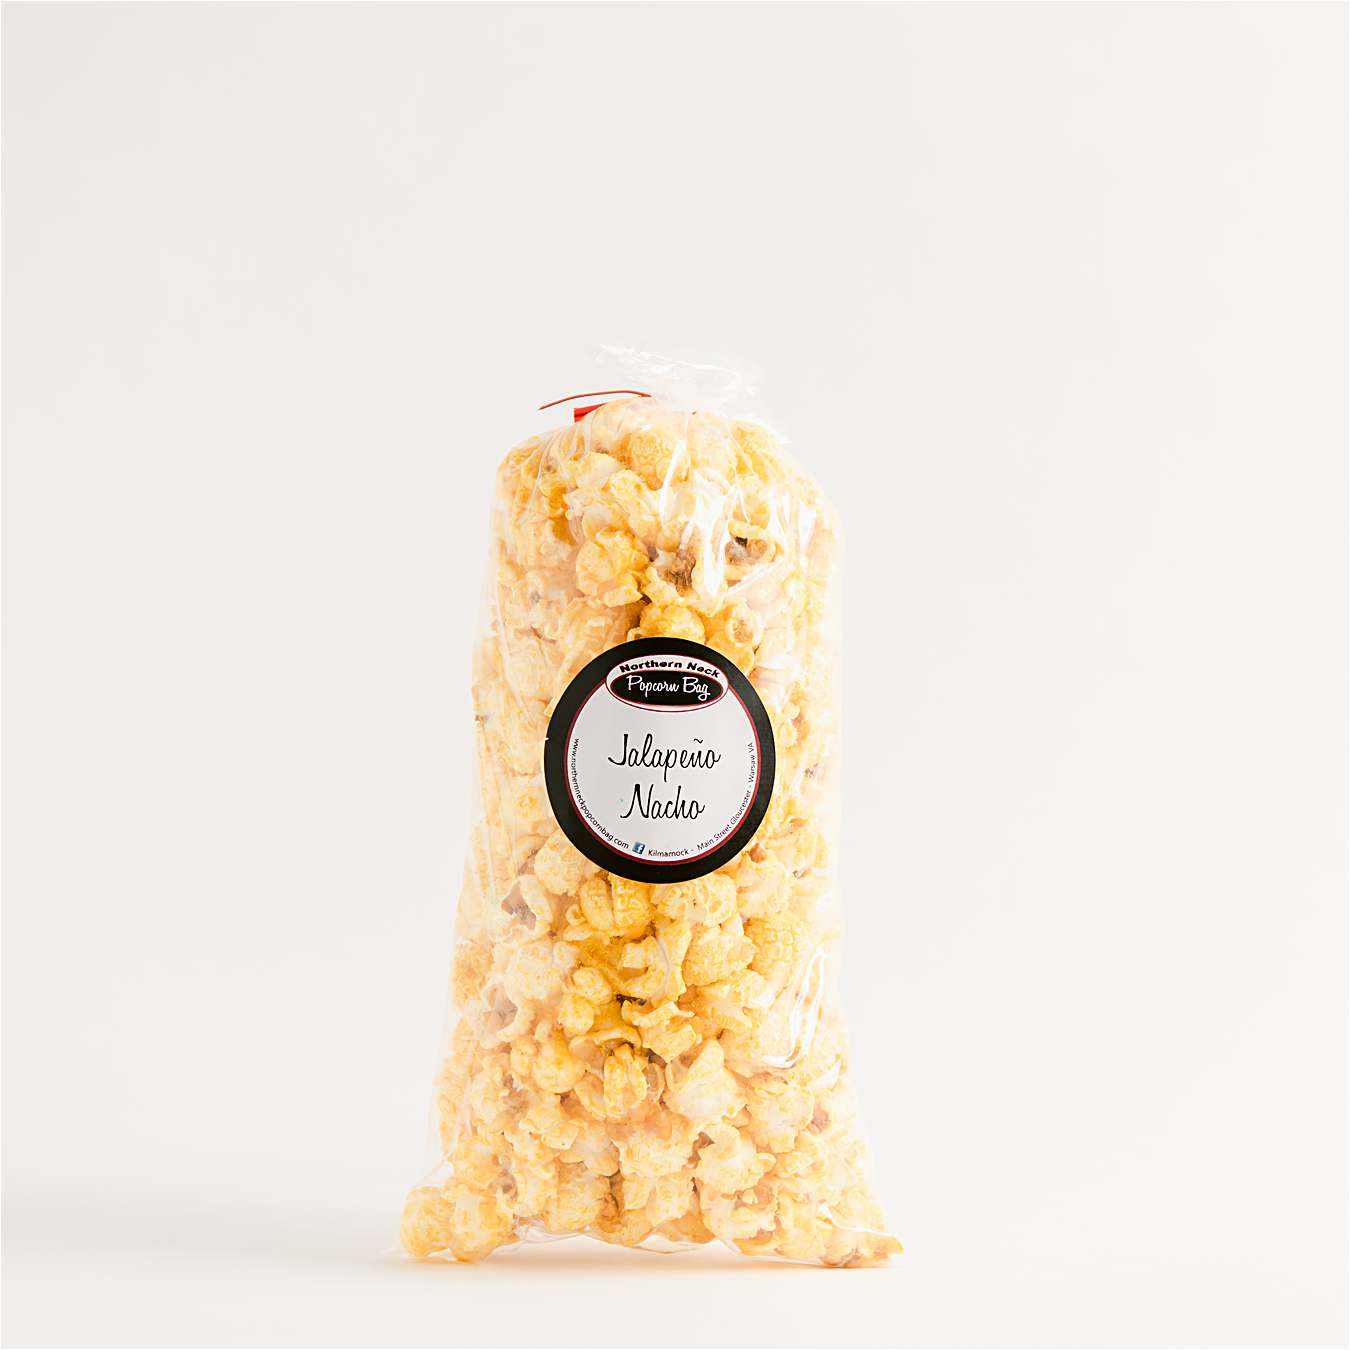 Jalapeno Nacho Popcorn